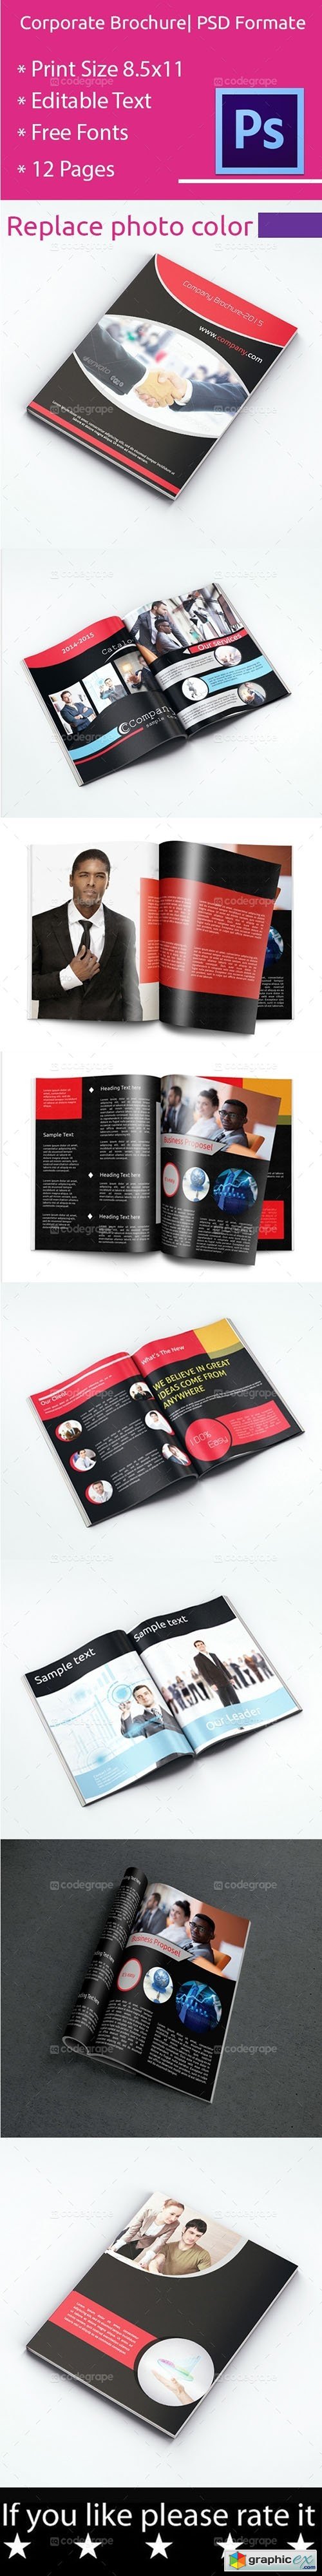 CodeGrape Corporate Brochure 5528